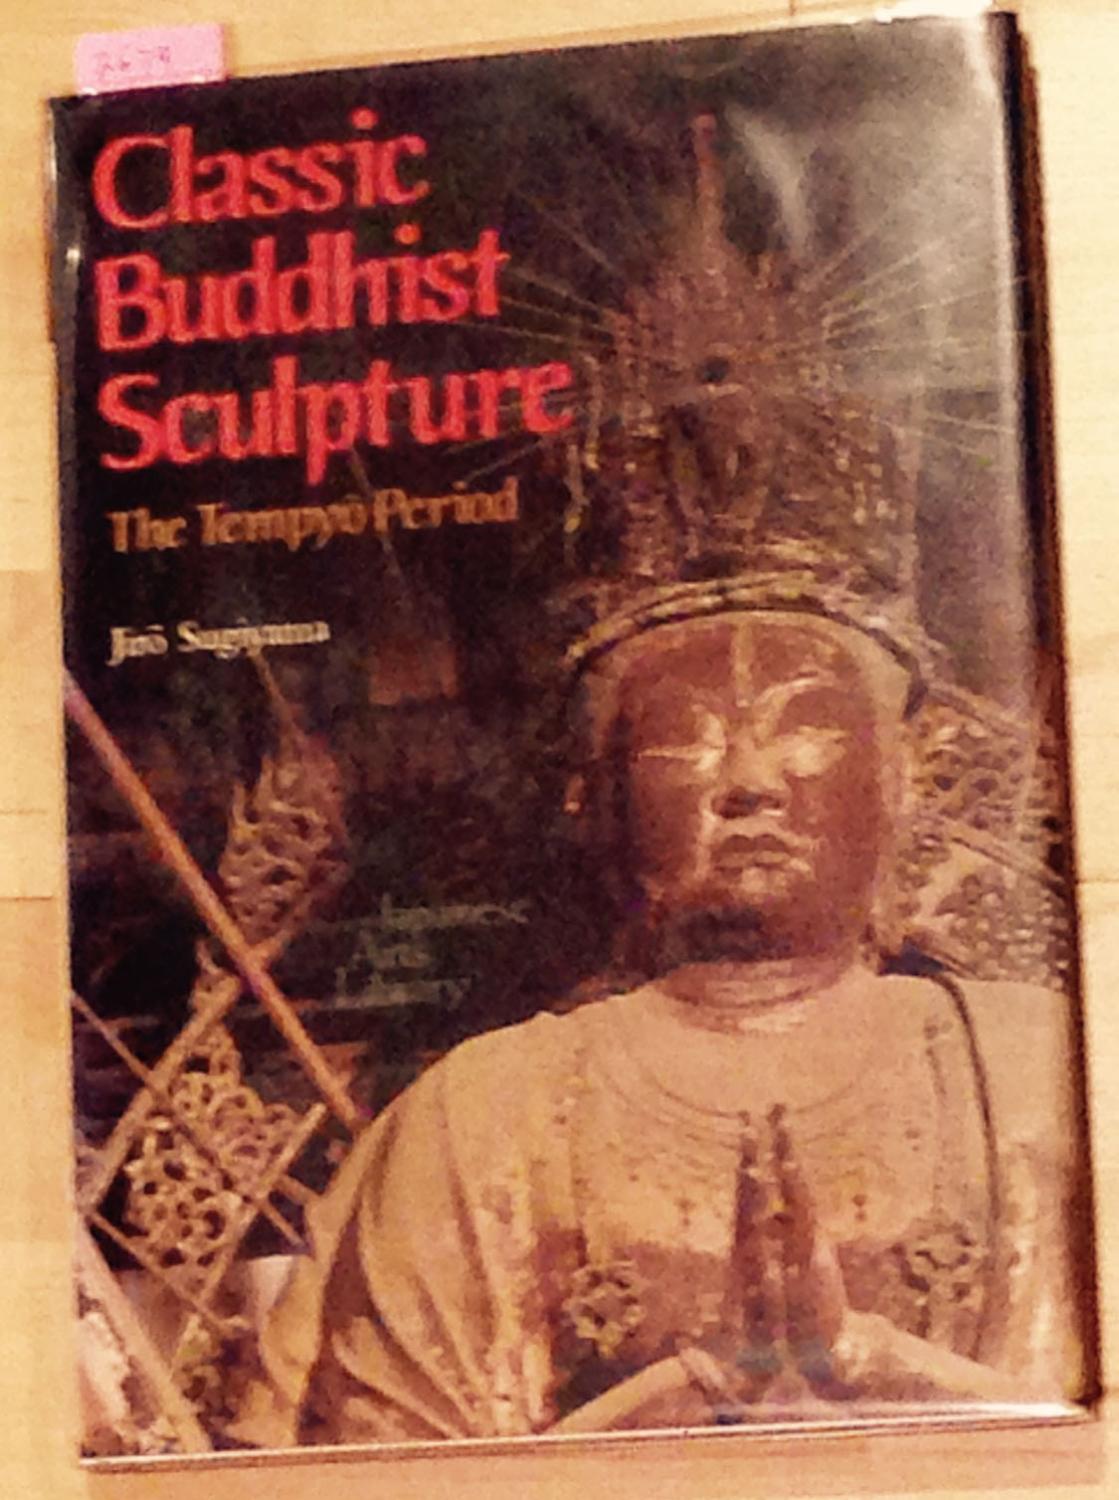 Classic Buddhist Sculpture The Tempyo Period by Sugiyama, Jiri: Fine ...